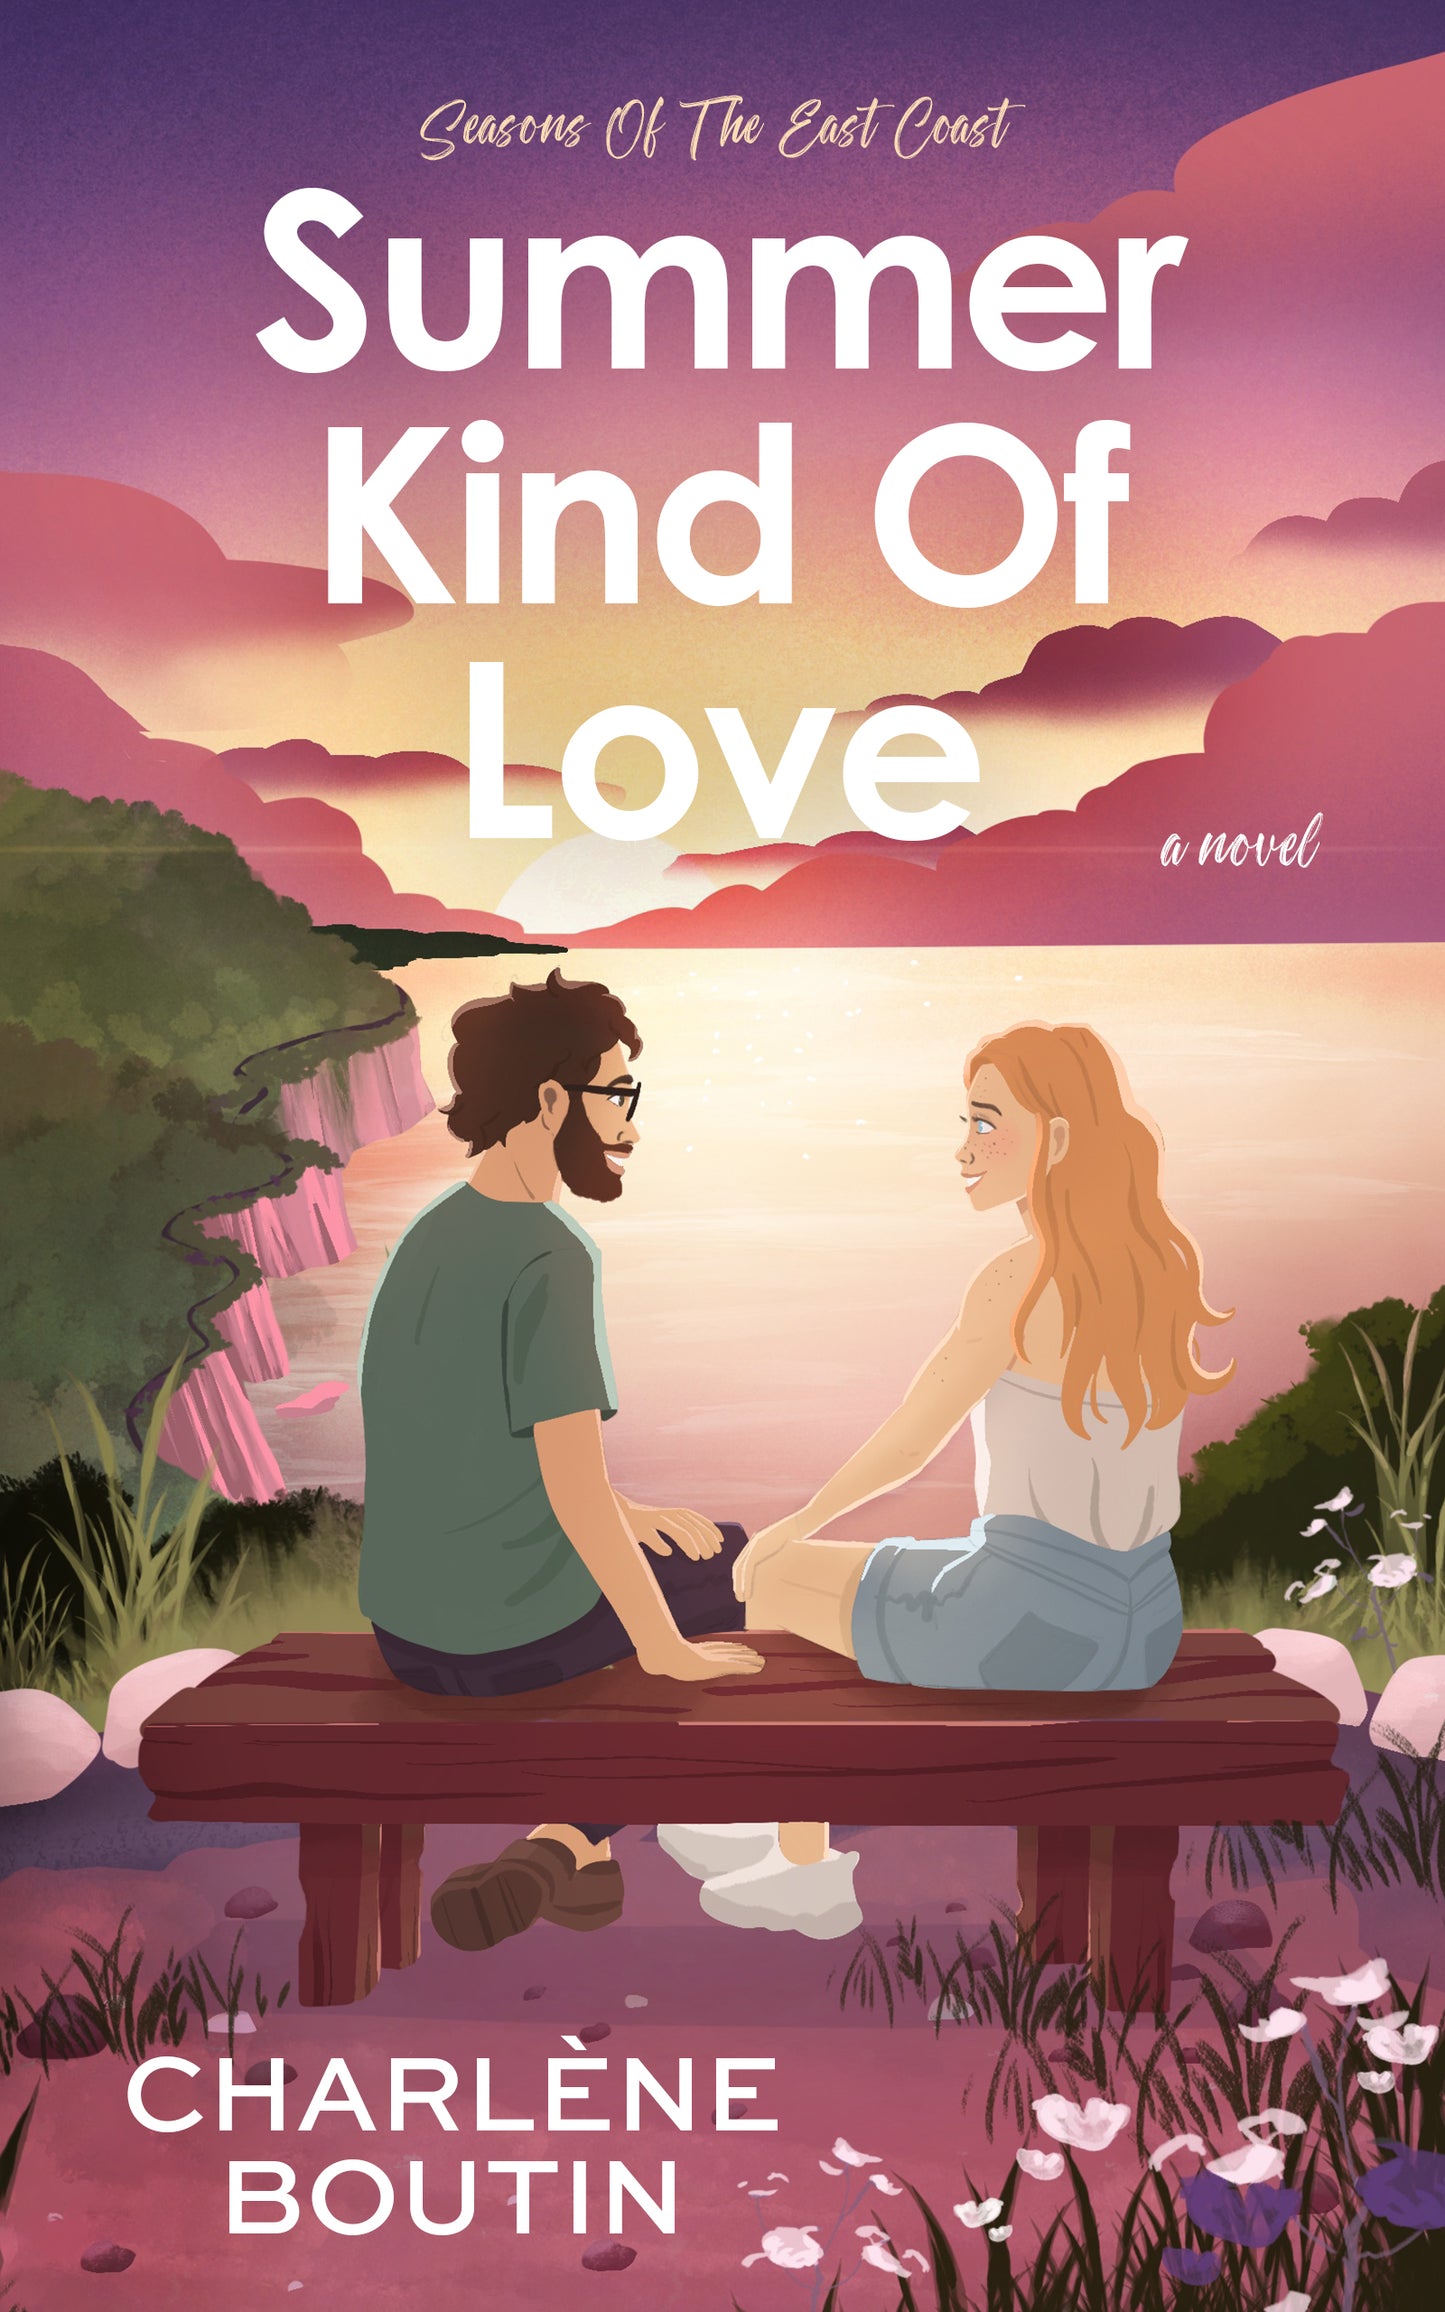 Summer Kind Of Love (Seasons Of The East Coast, Book 1)